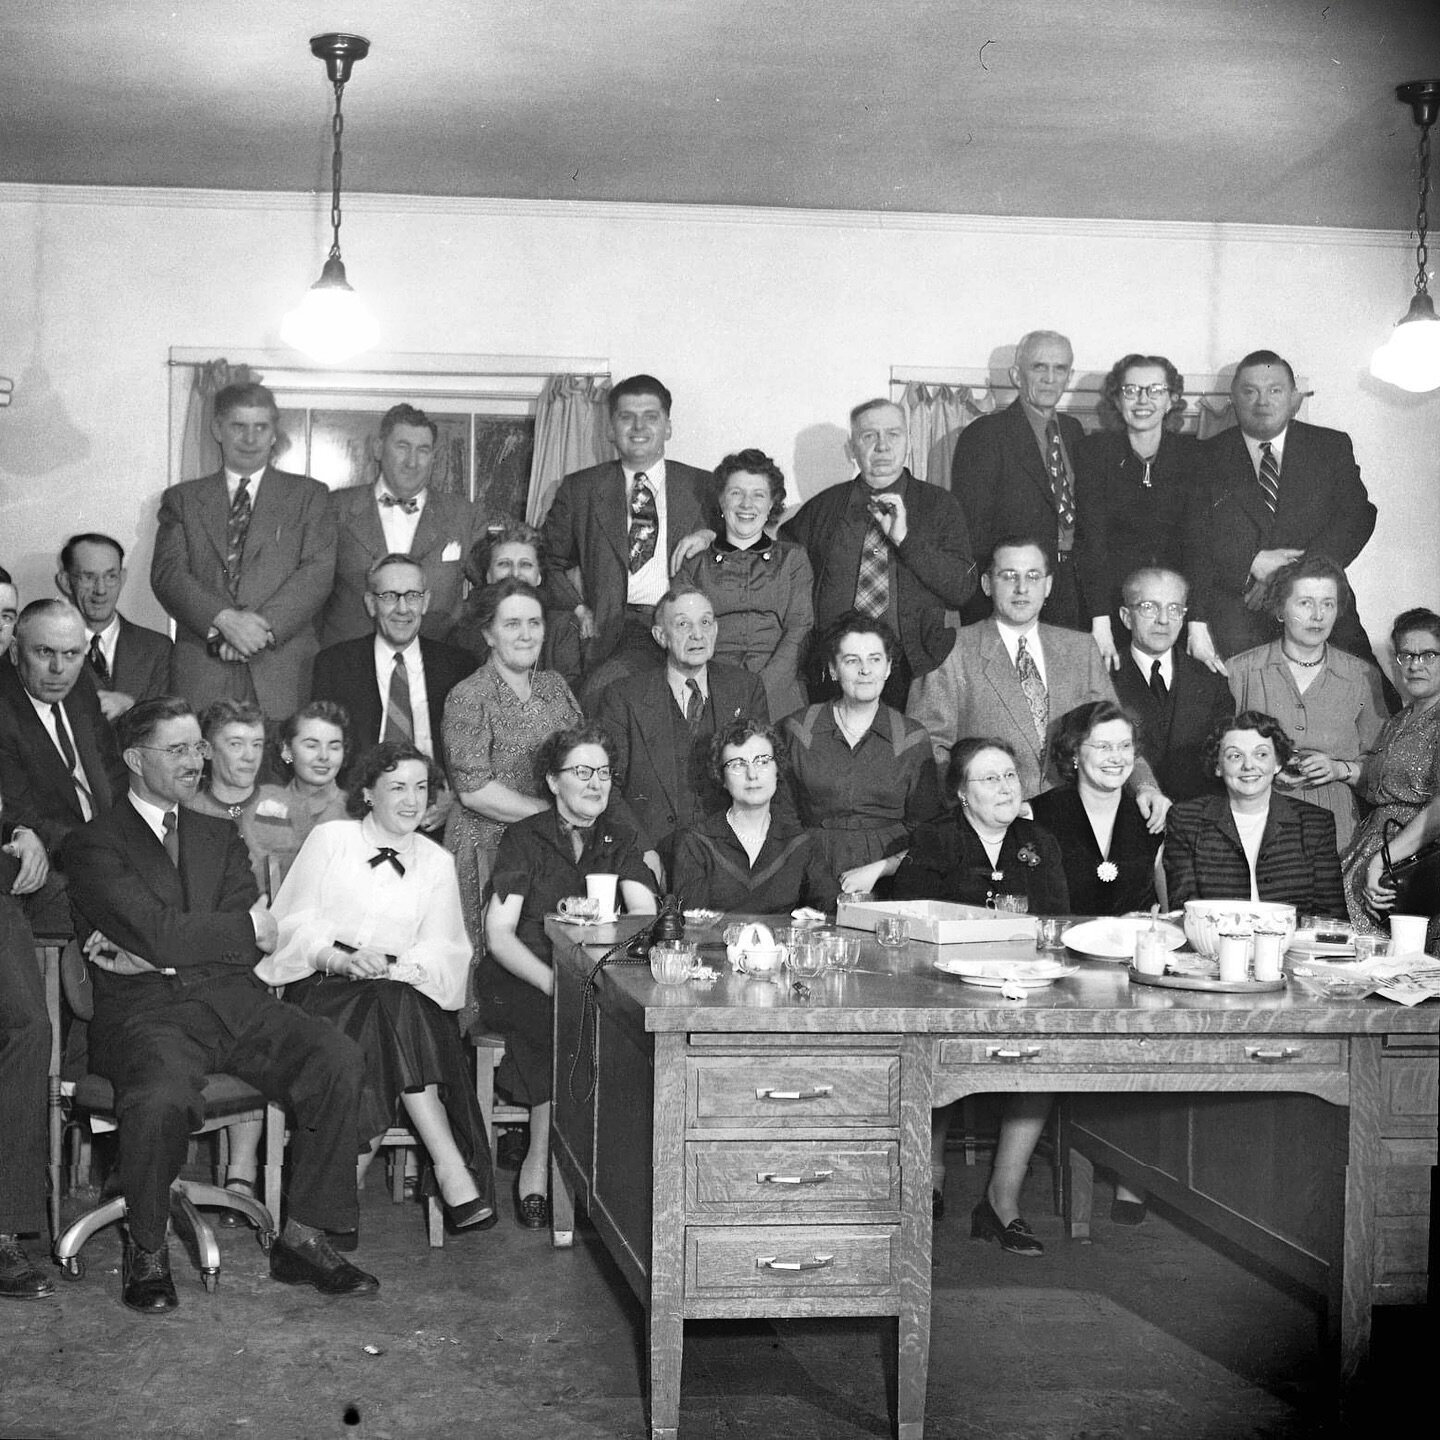 1951 - Delaware County Employees. Bob Wyer photo.